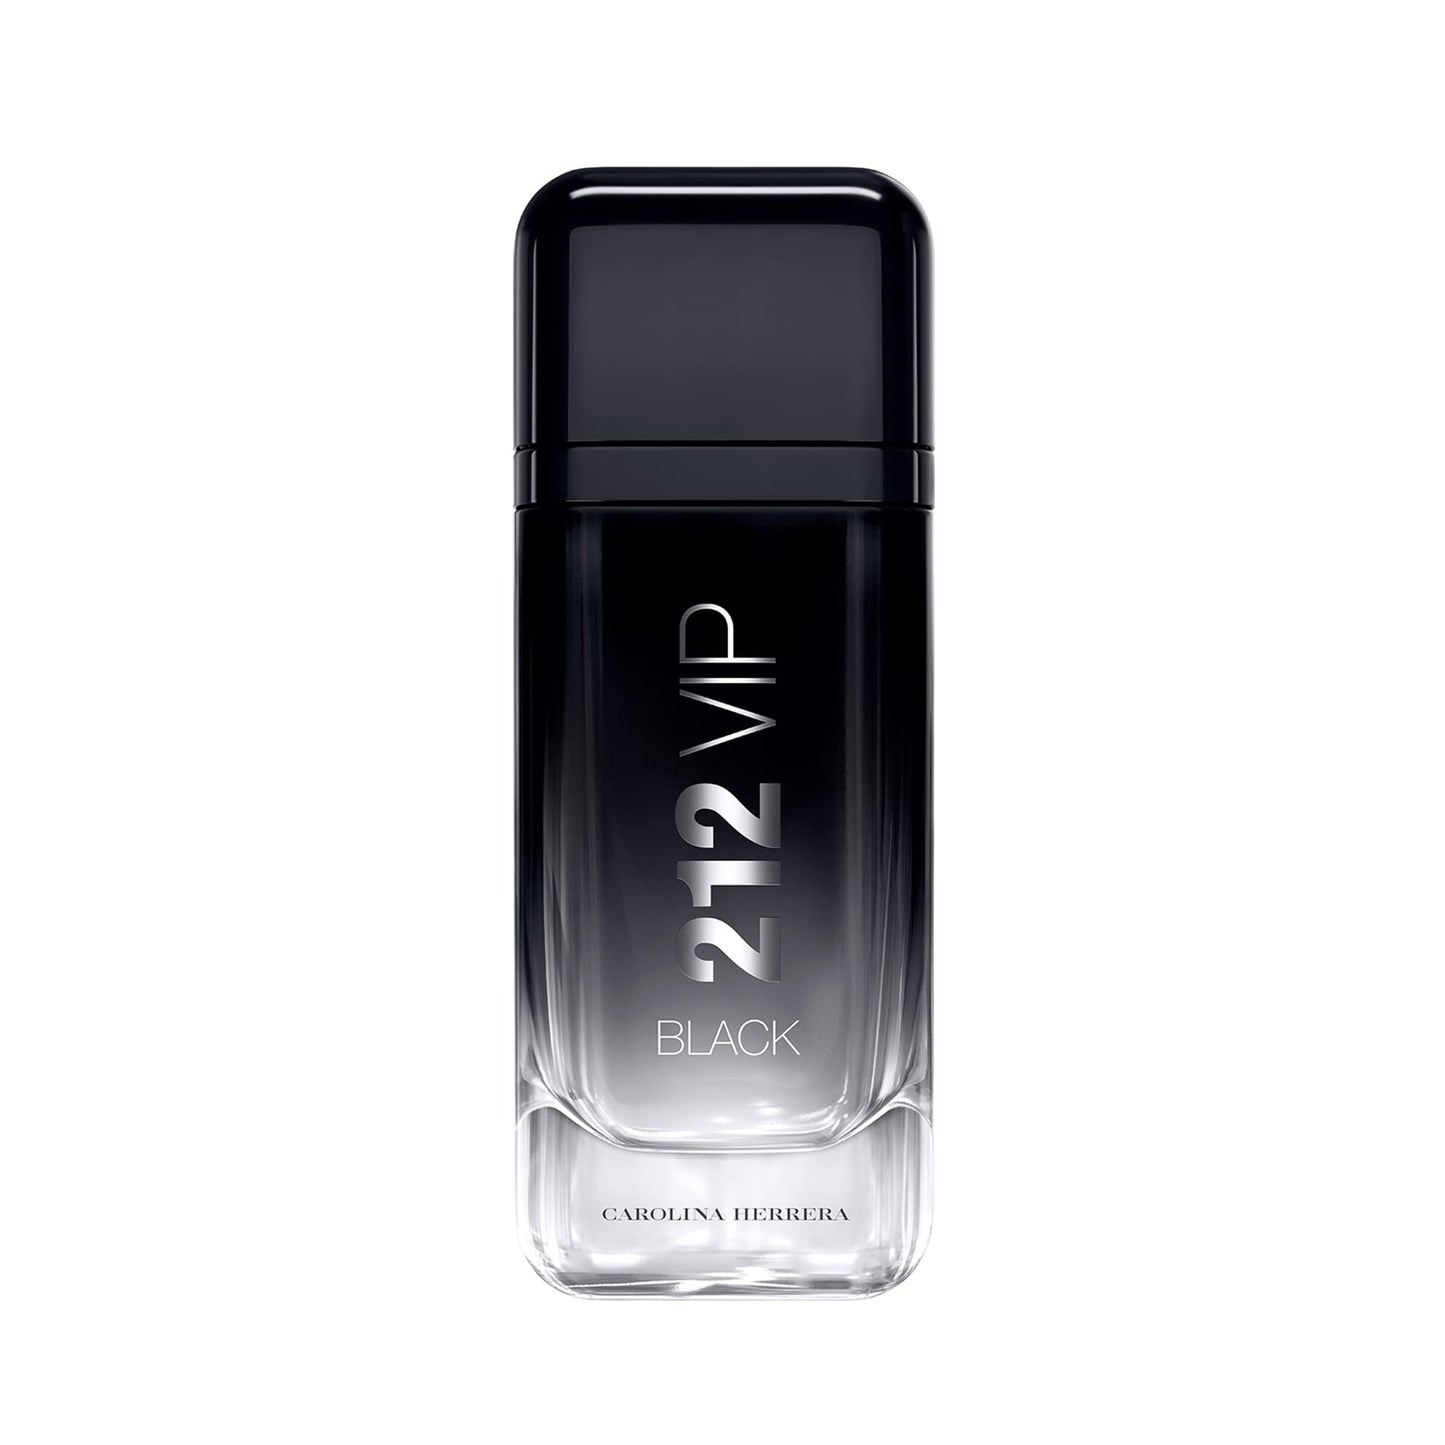 Carolina Herrera 212 VIP Black Perfume Para Hombre 100ml Eau de Parfum